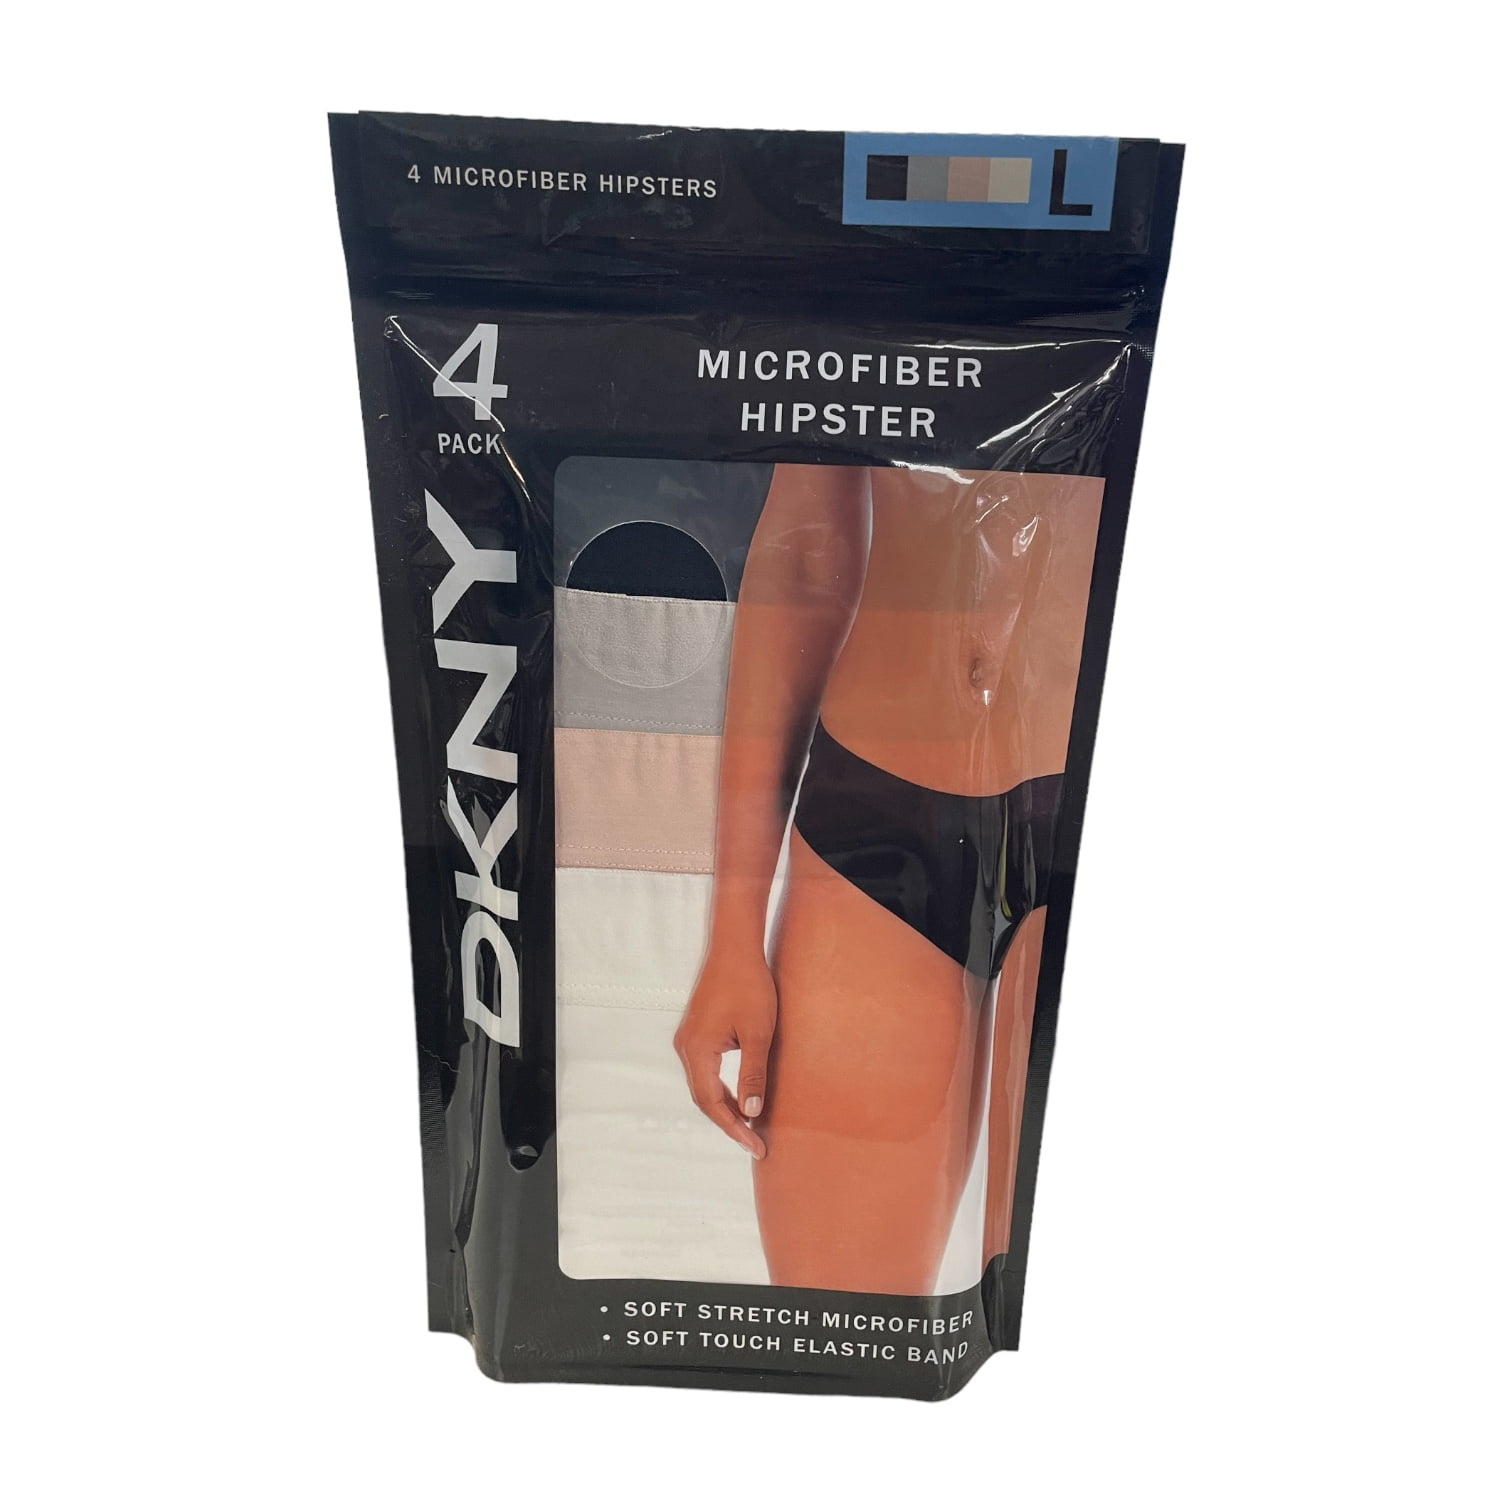 DKNY Women's Soft Stretch Microfiber 4 Pack Hipster Underwear  (Black/Gray/Pink/White, XL)